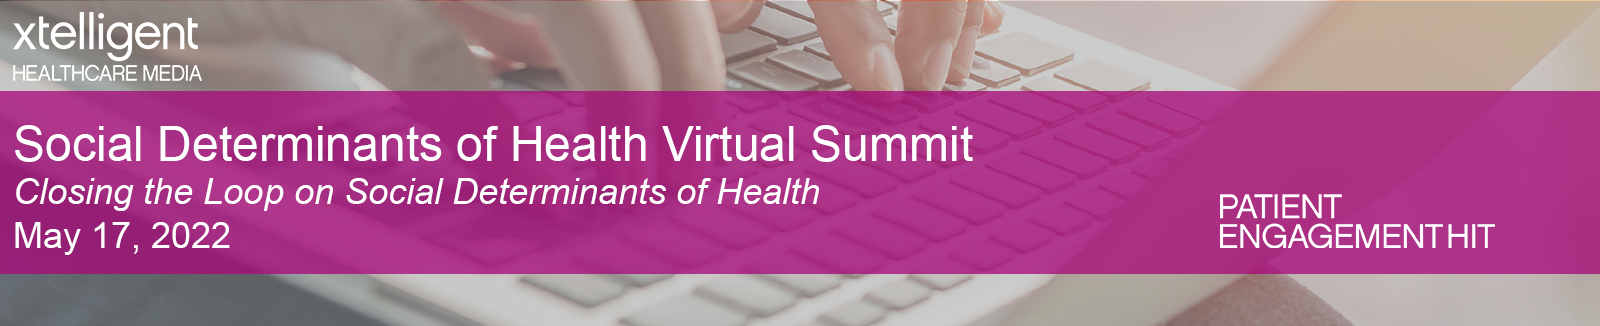 Social Determinants of Health Virtual Summit